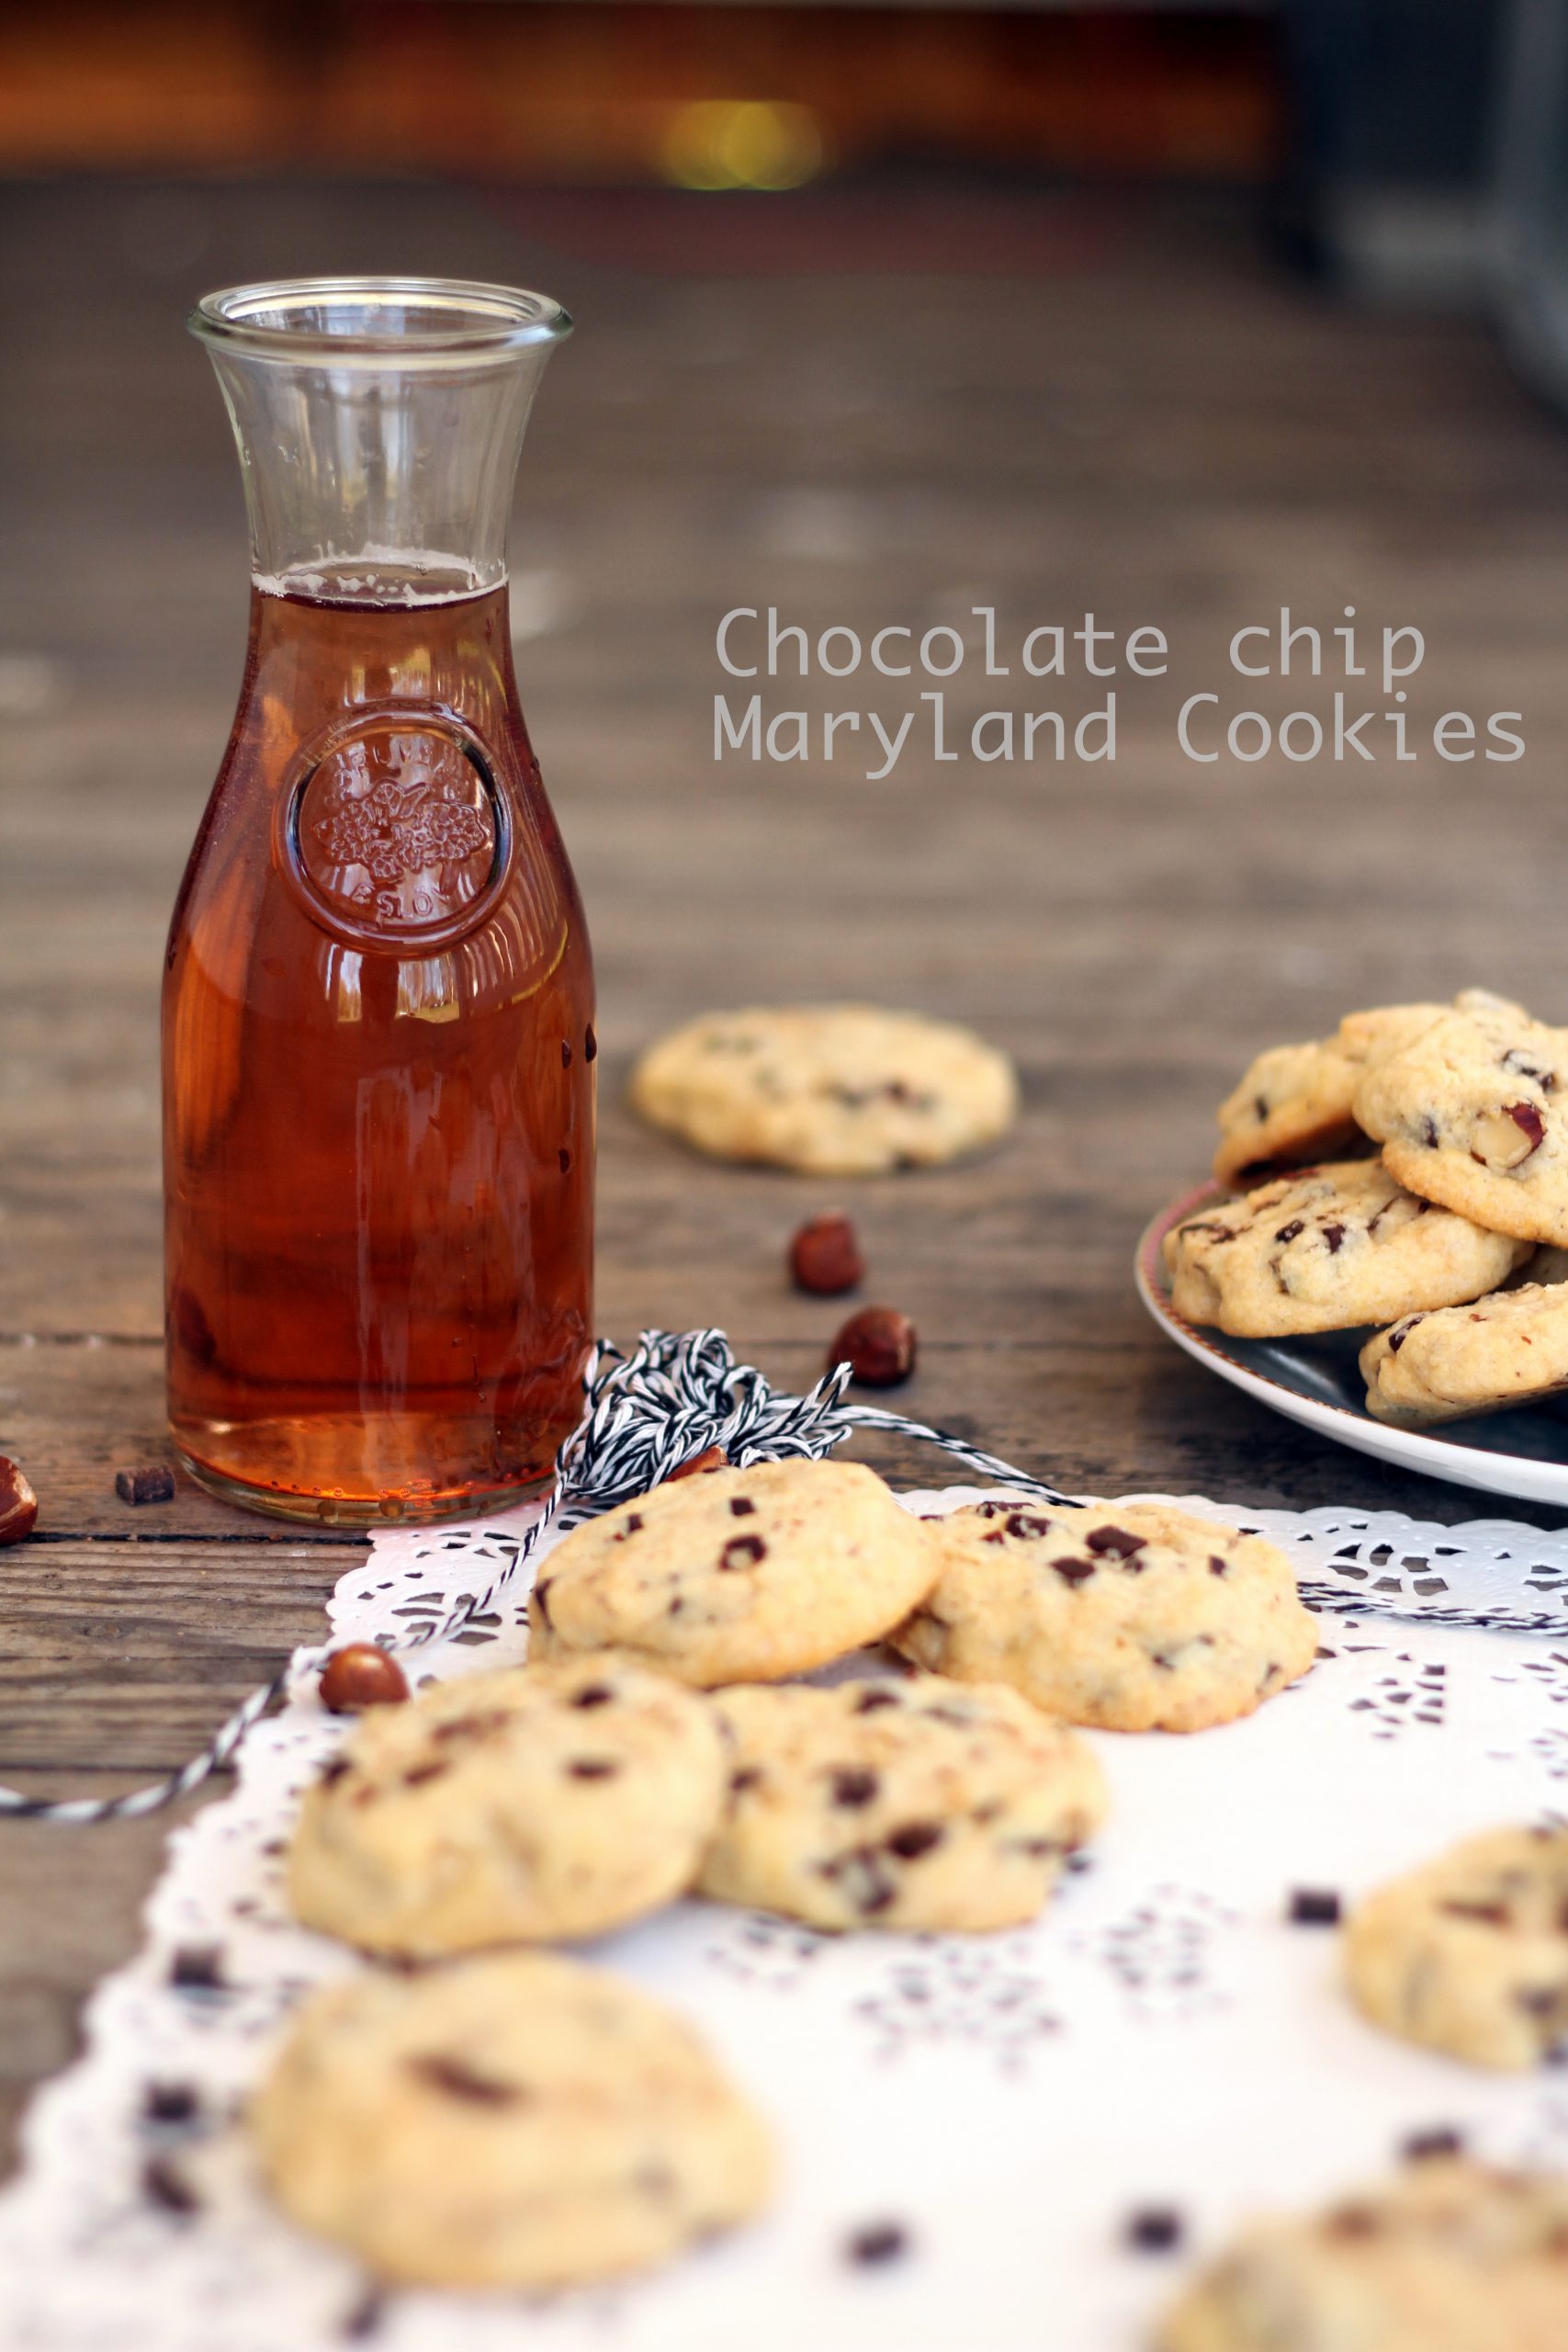 Chocolate chip Maryland Cookies